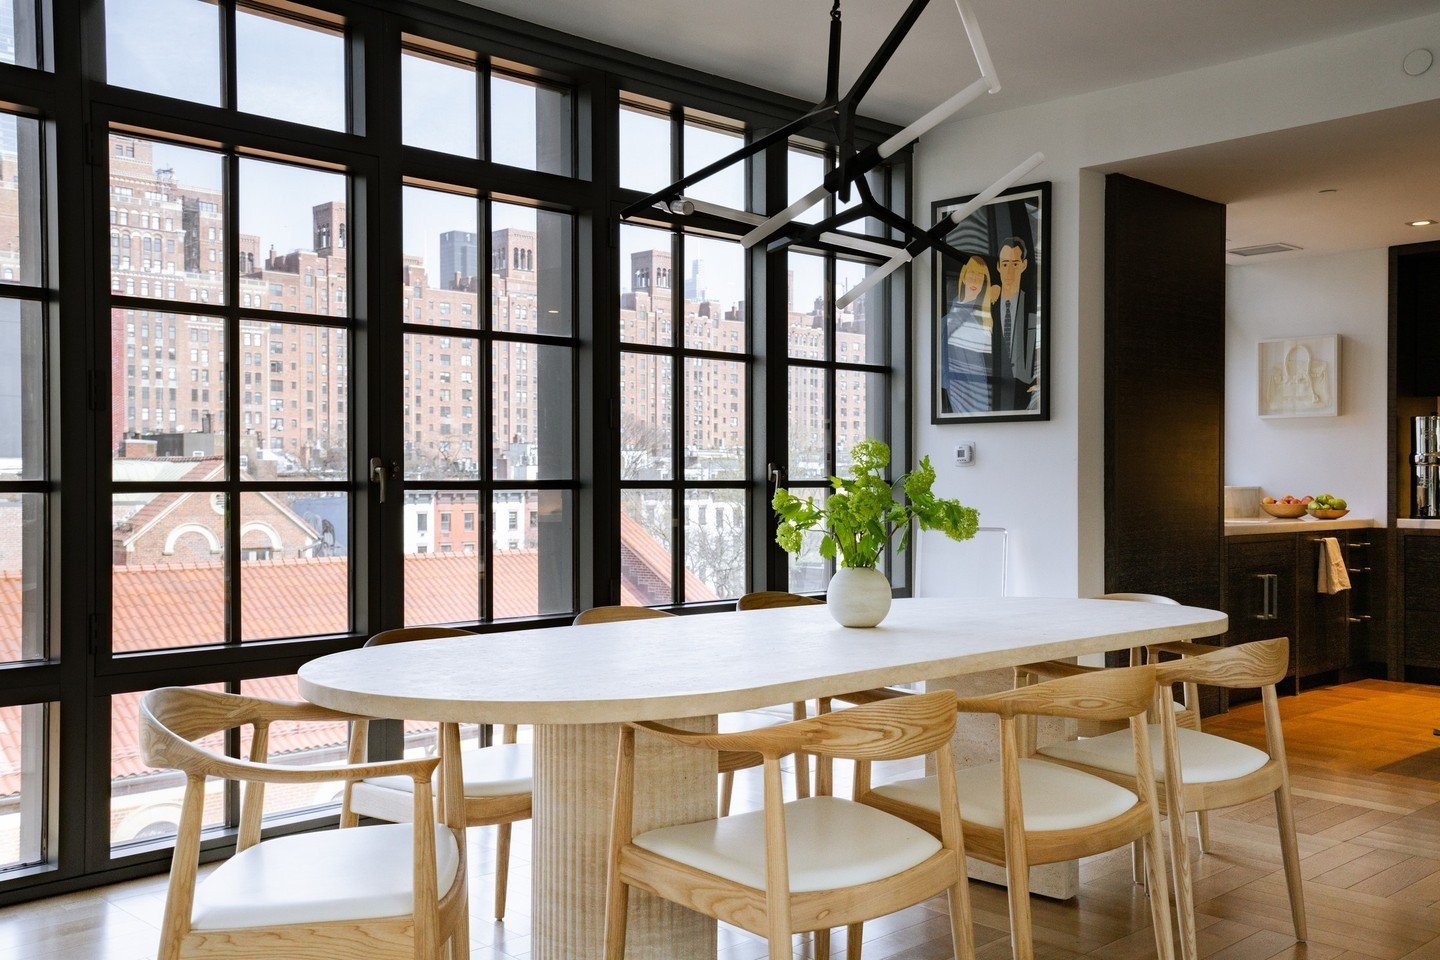 Dining room view of West Chelsea⁠
.⁠
.⁠
.⁠
.⁠
.⁠
.⁠
.⁠
.⁠
📸 @ckatherton⁠
#OrleyInteriors #WestChelsea #NewYorkCity #InteriorDesign